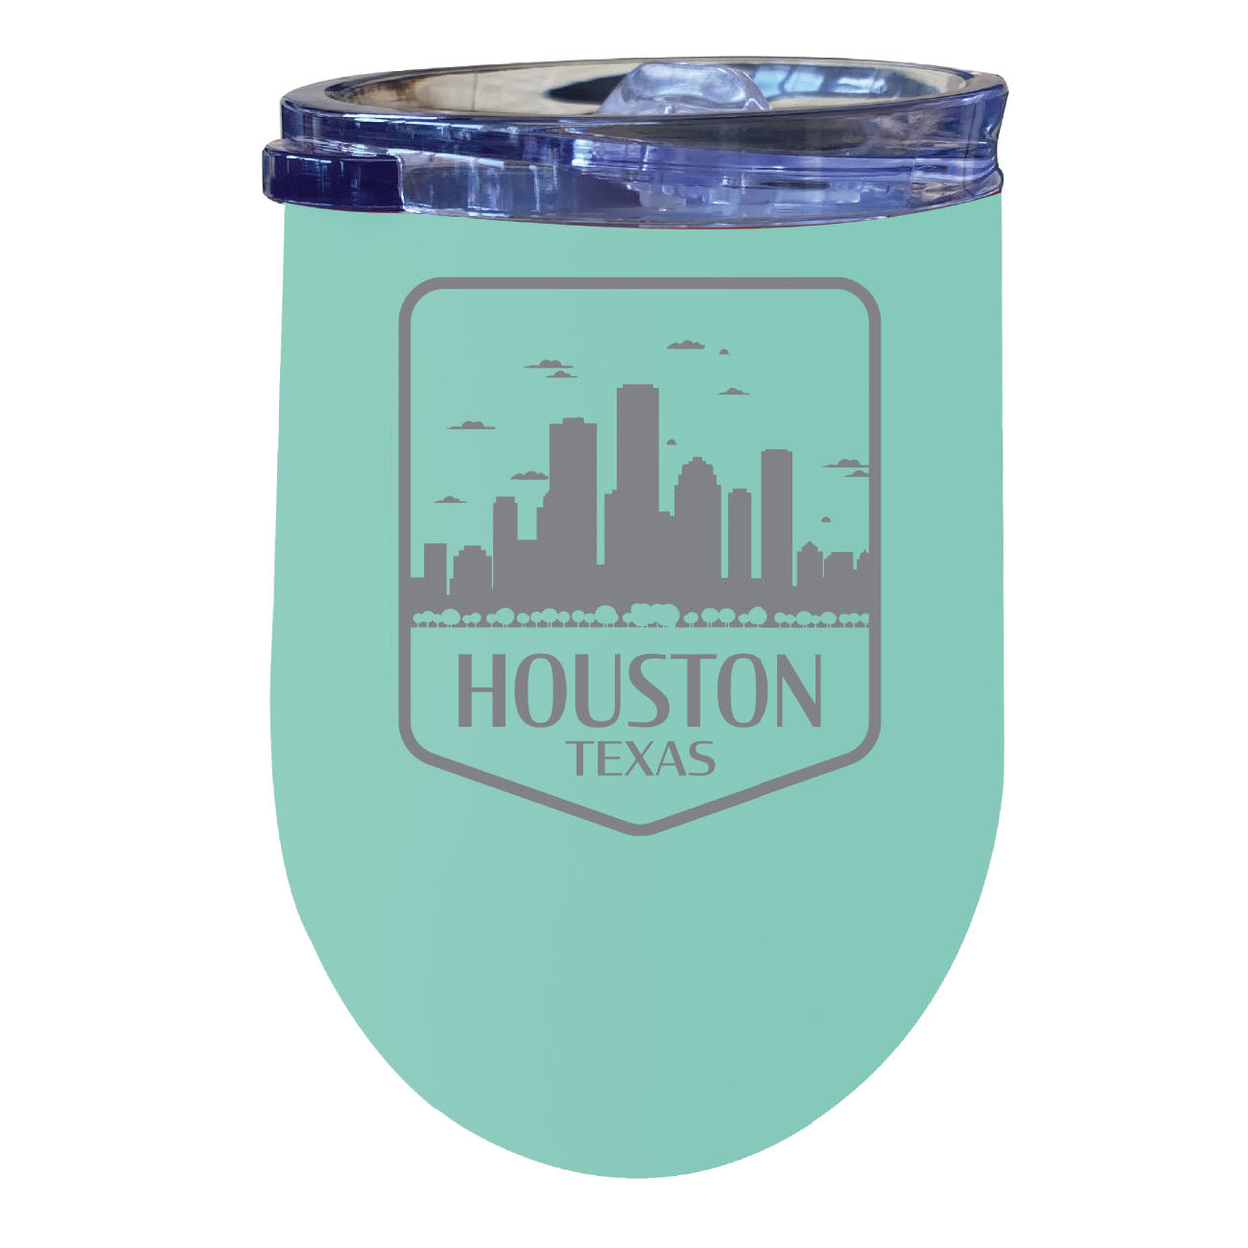 Houston Texas Souvenir 12 Oz Engraved Insulated Wine Stainless Steel Tumbler - Rainbow Glitter Gray,,4-Pack